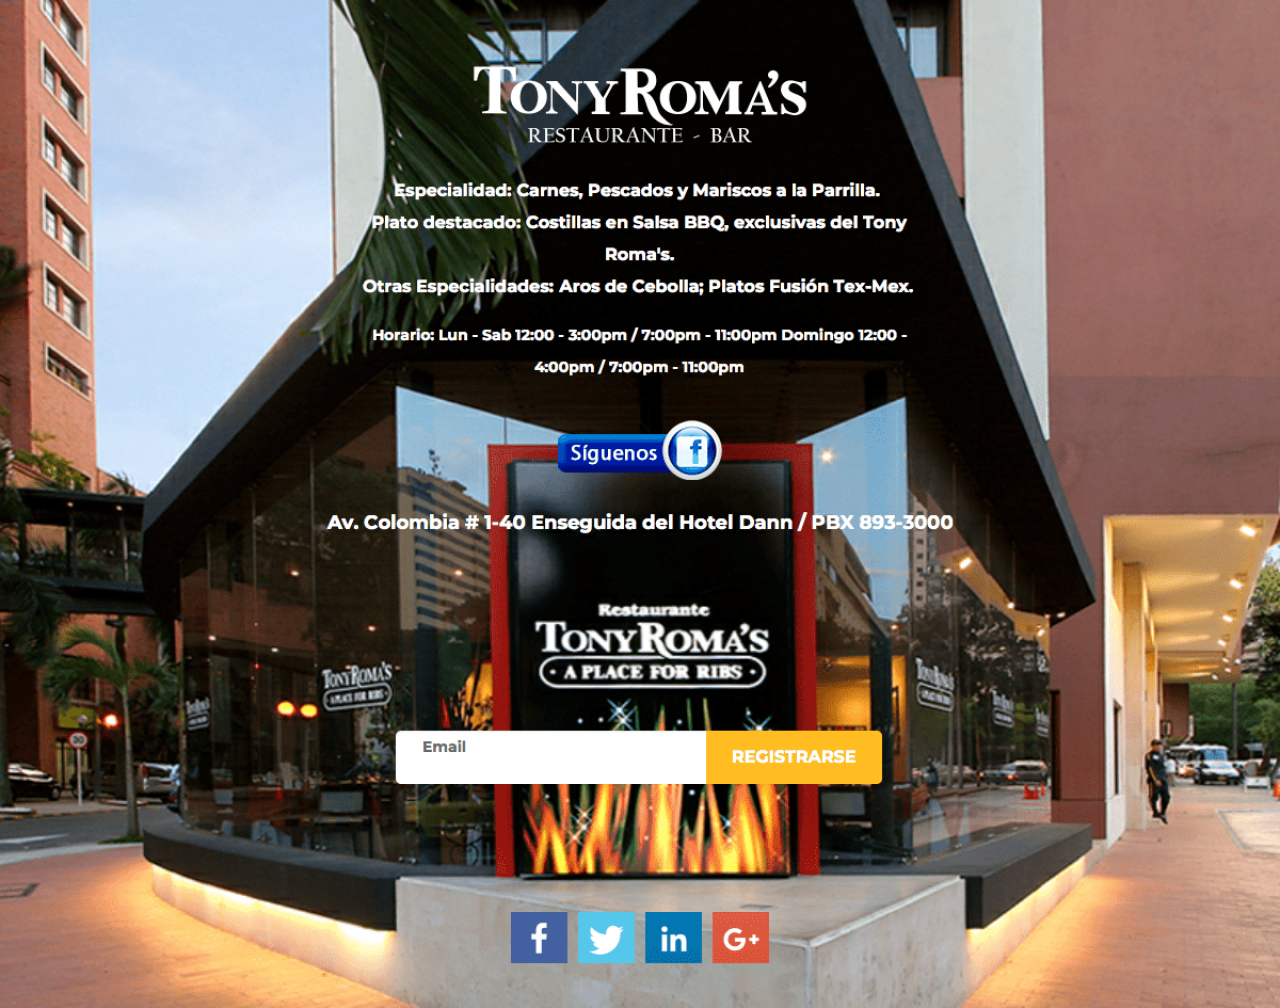 Restaurante Tony Romas example - Made with MailerLite